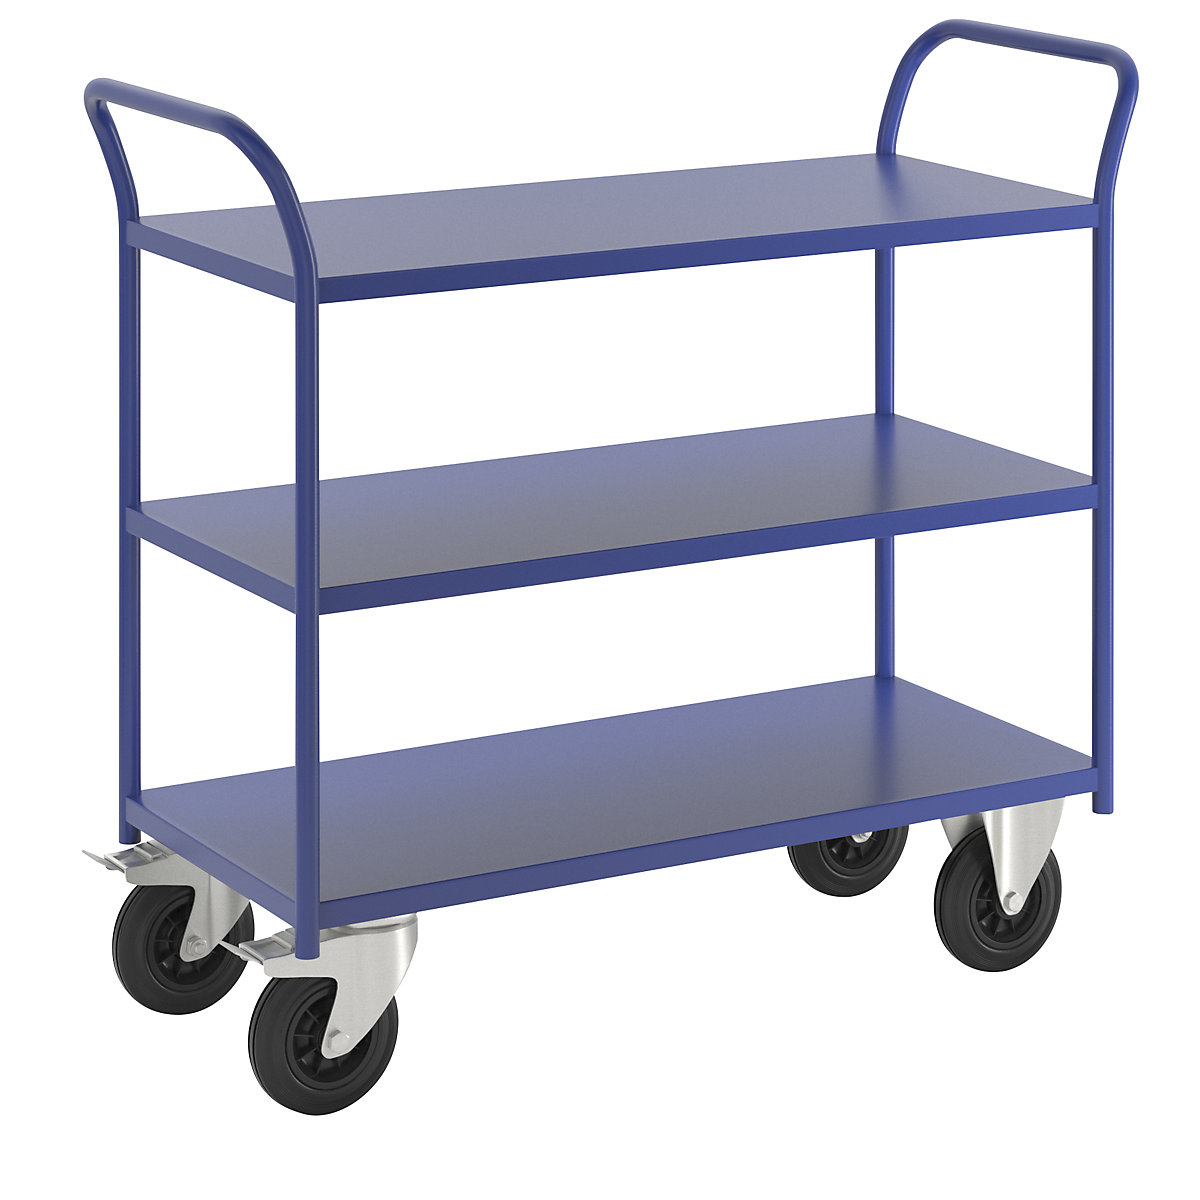 KM41 table trolley – Kongamek, 3 shelves, LxWxH 1080 x 450 x 975 mm, blue, 2 swivel castors with stops, 2 fixed castors-7